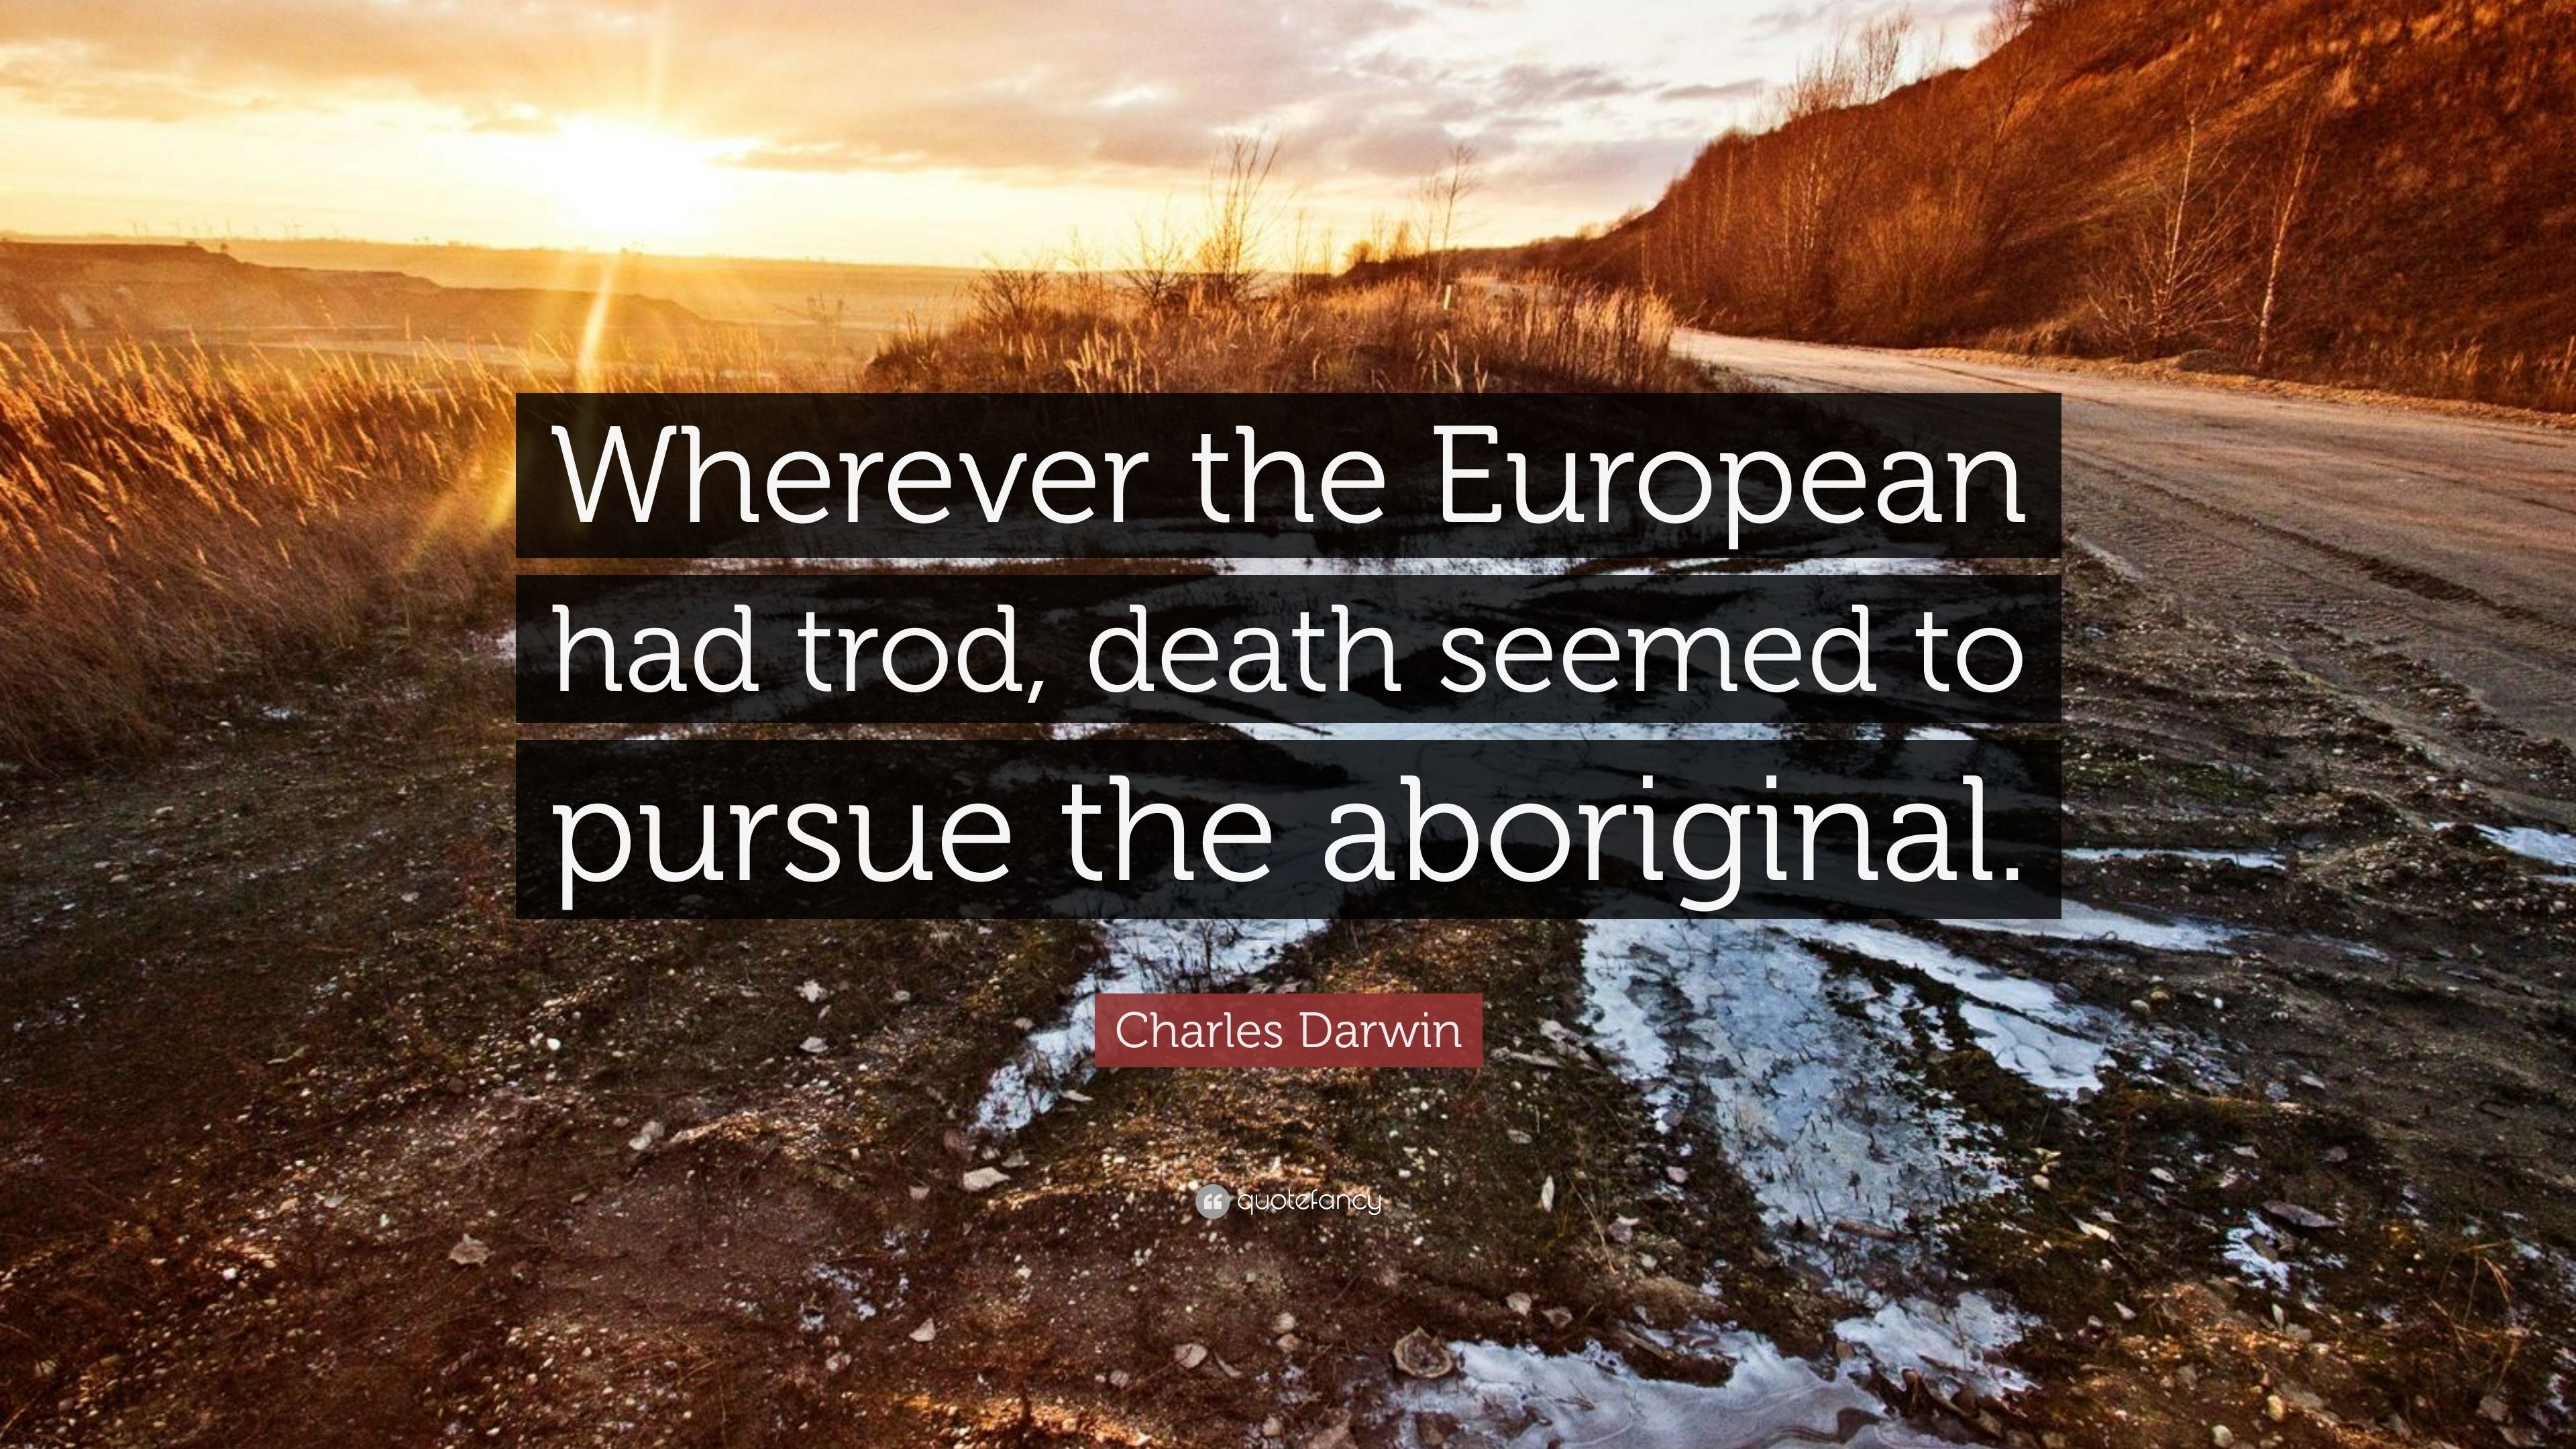 Charles Darwin Quote: “Wherever the European had trod, death